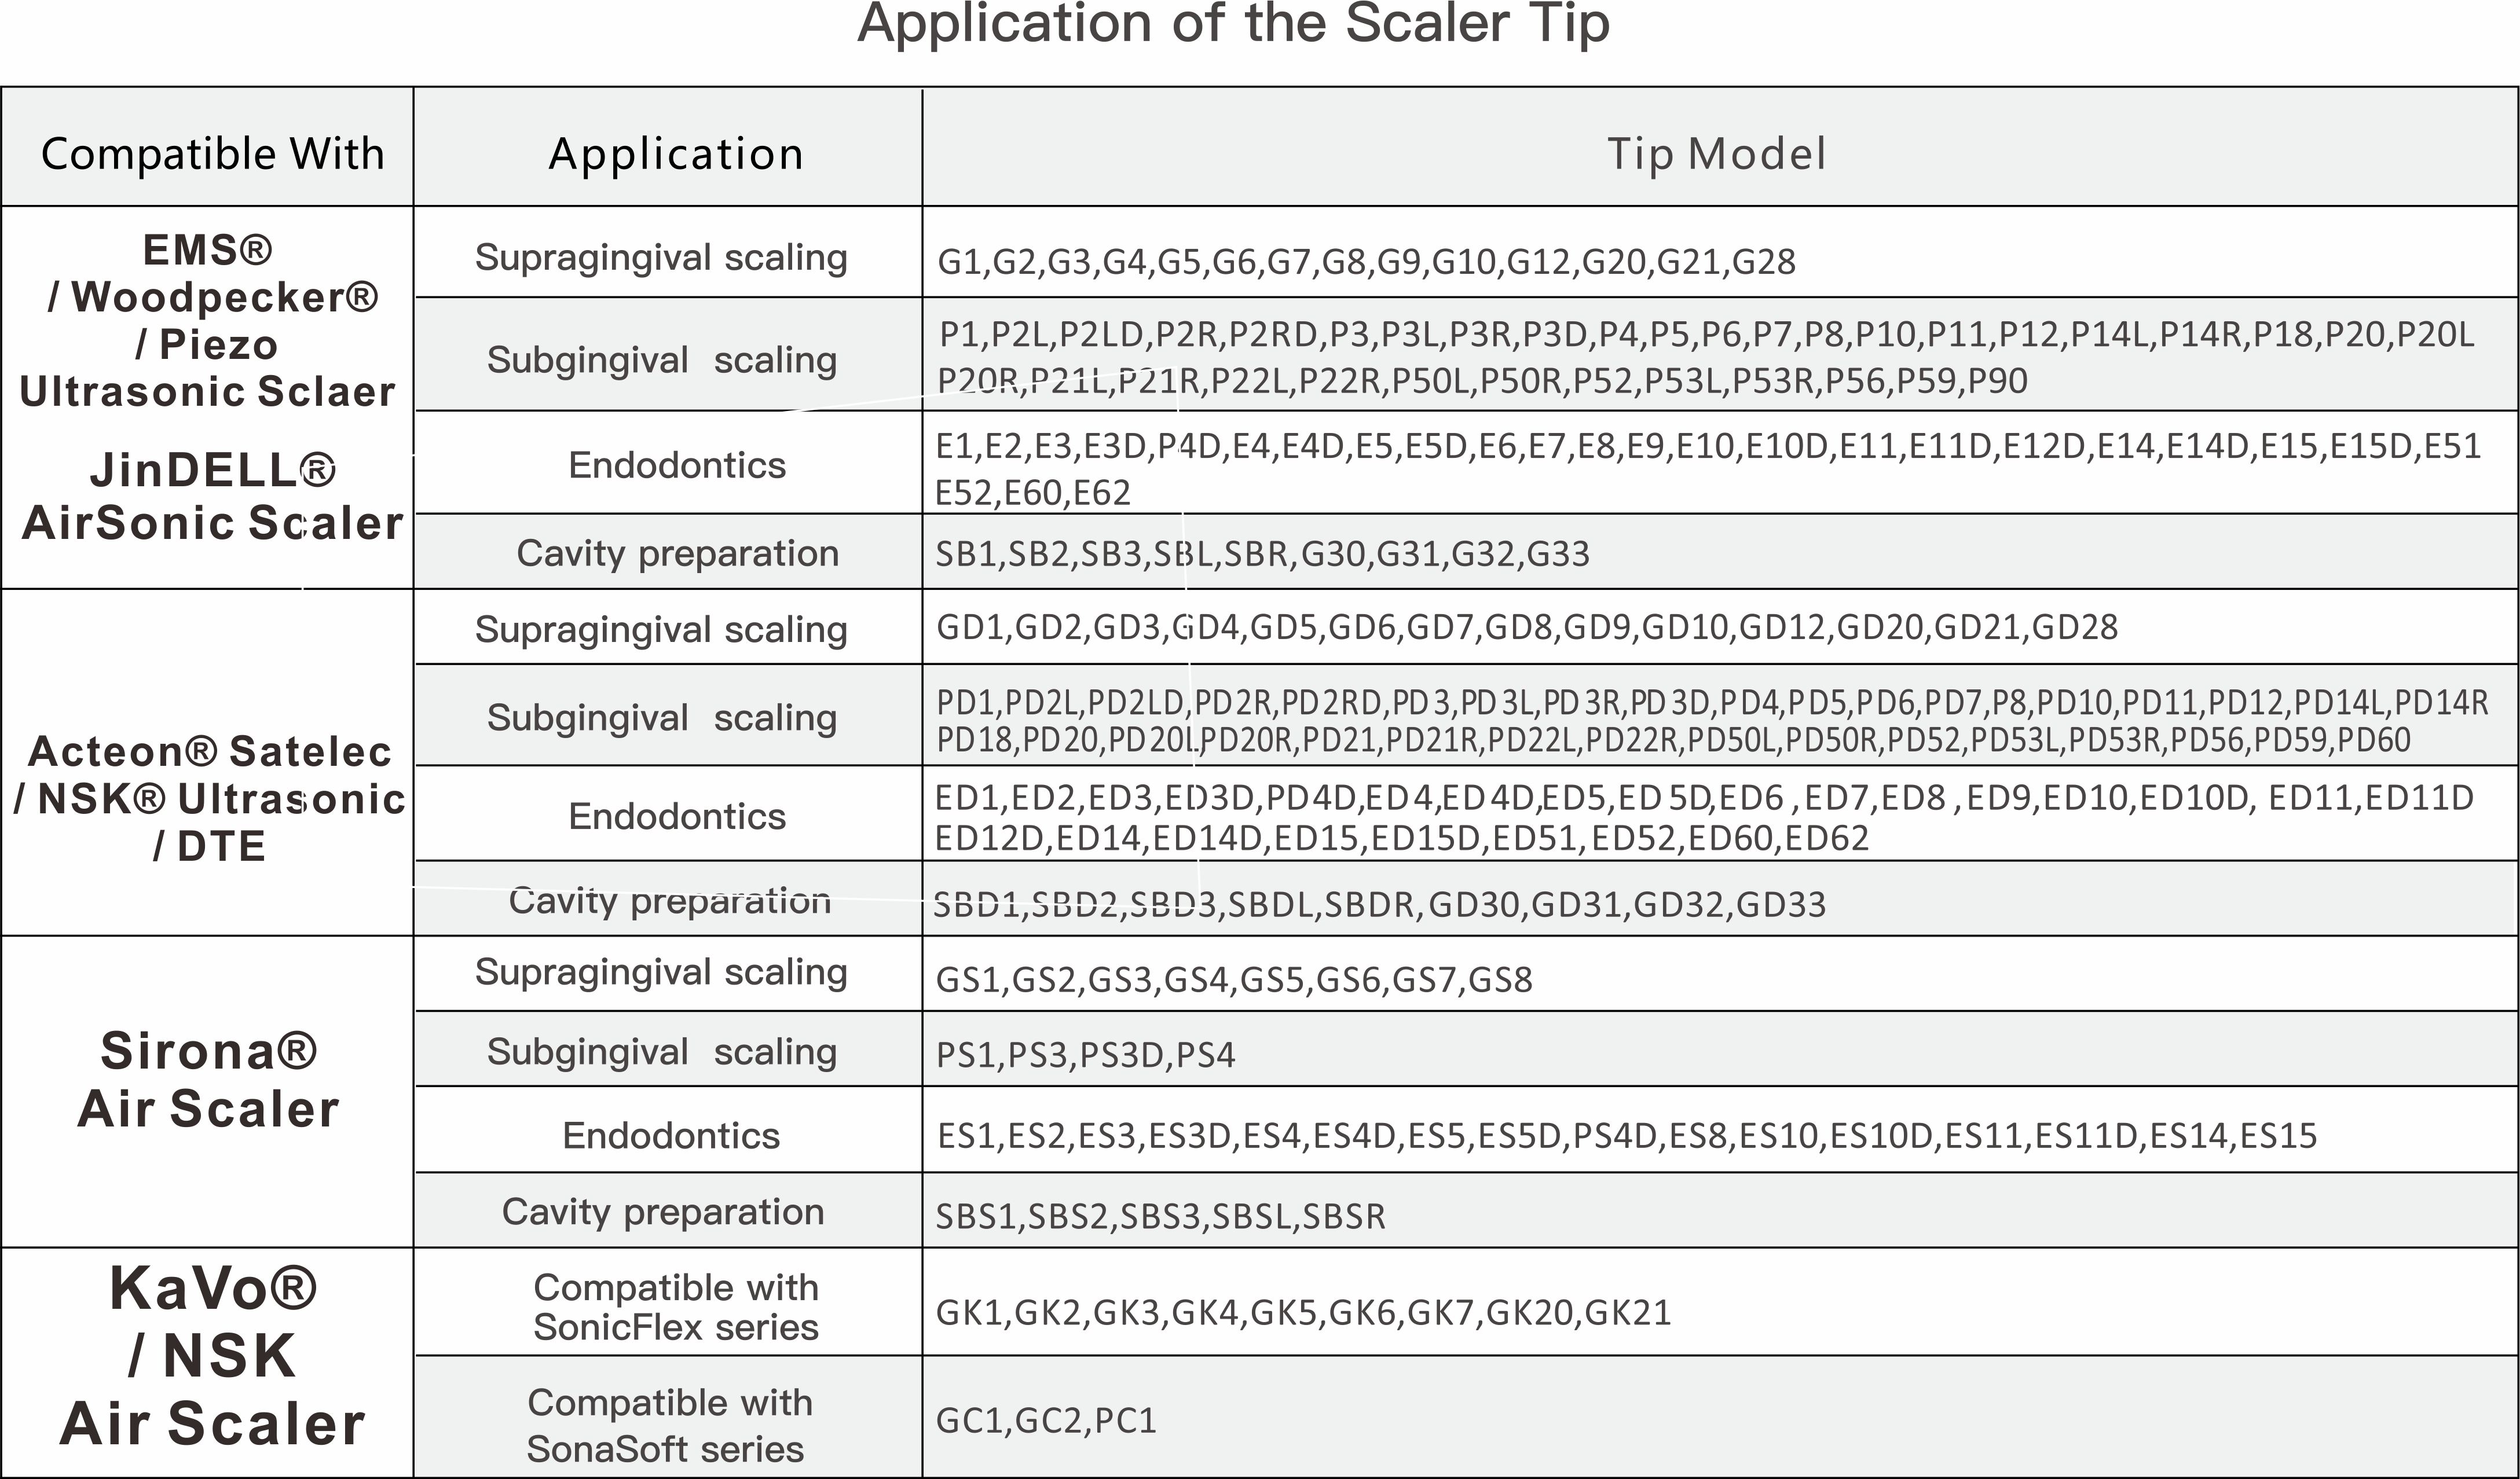 Application of Scaler Tip